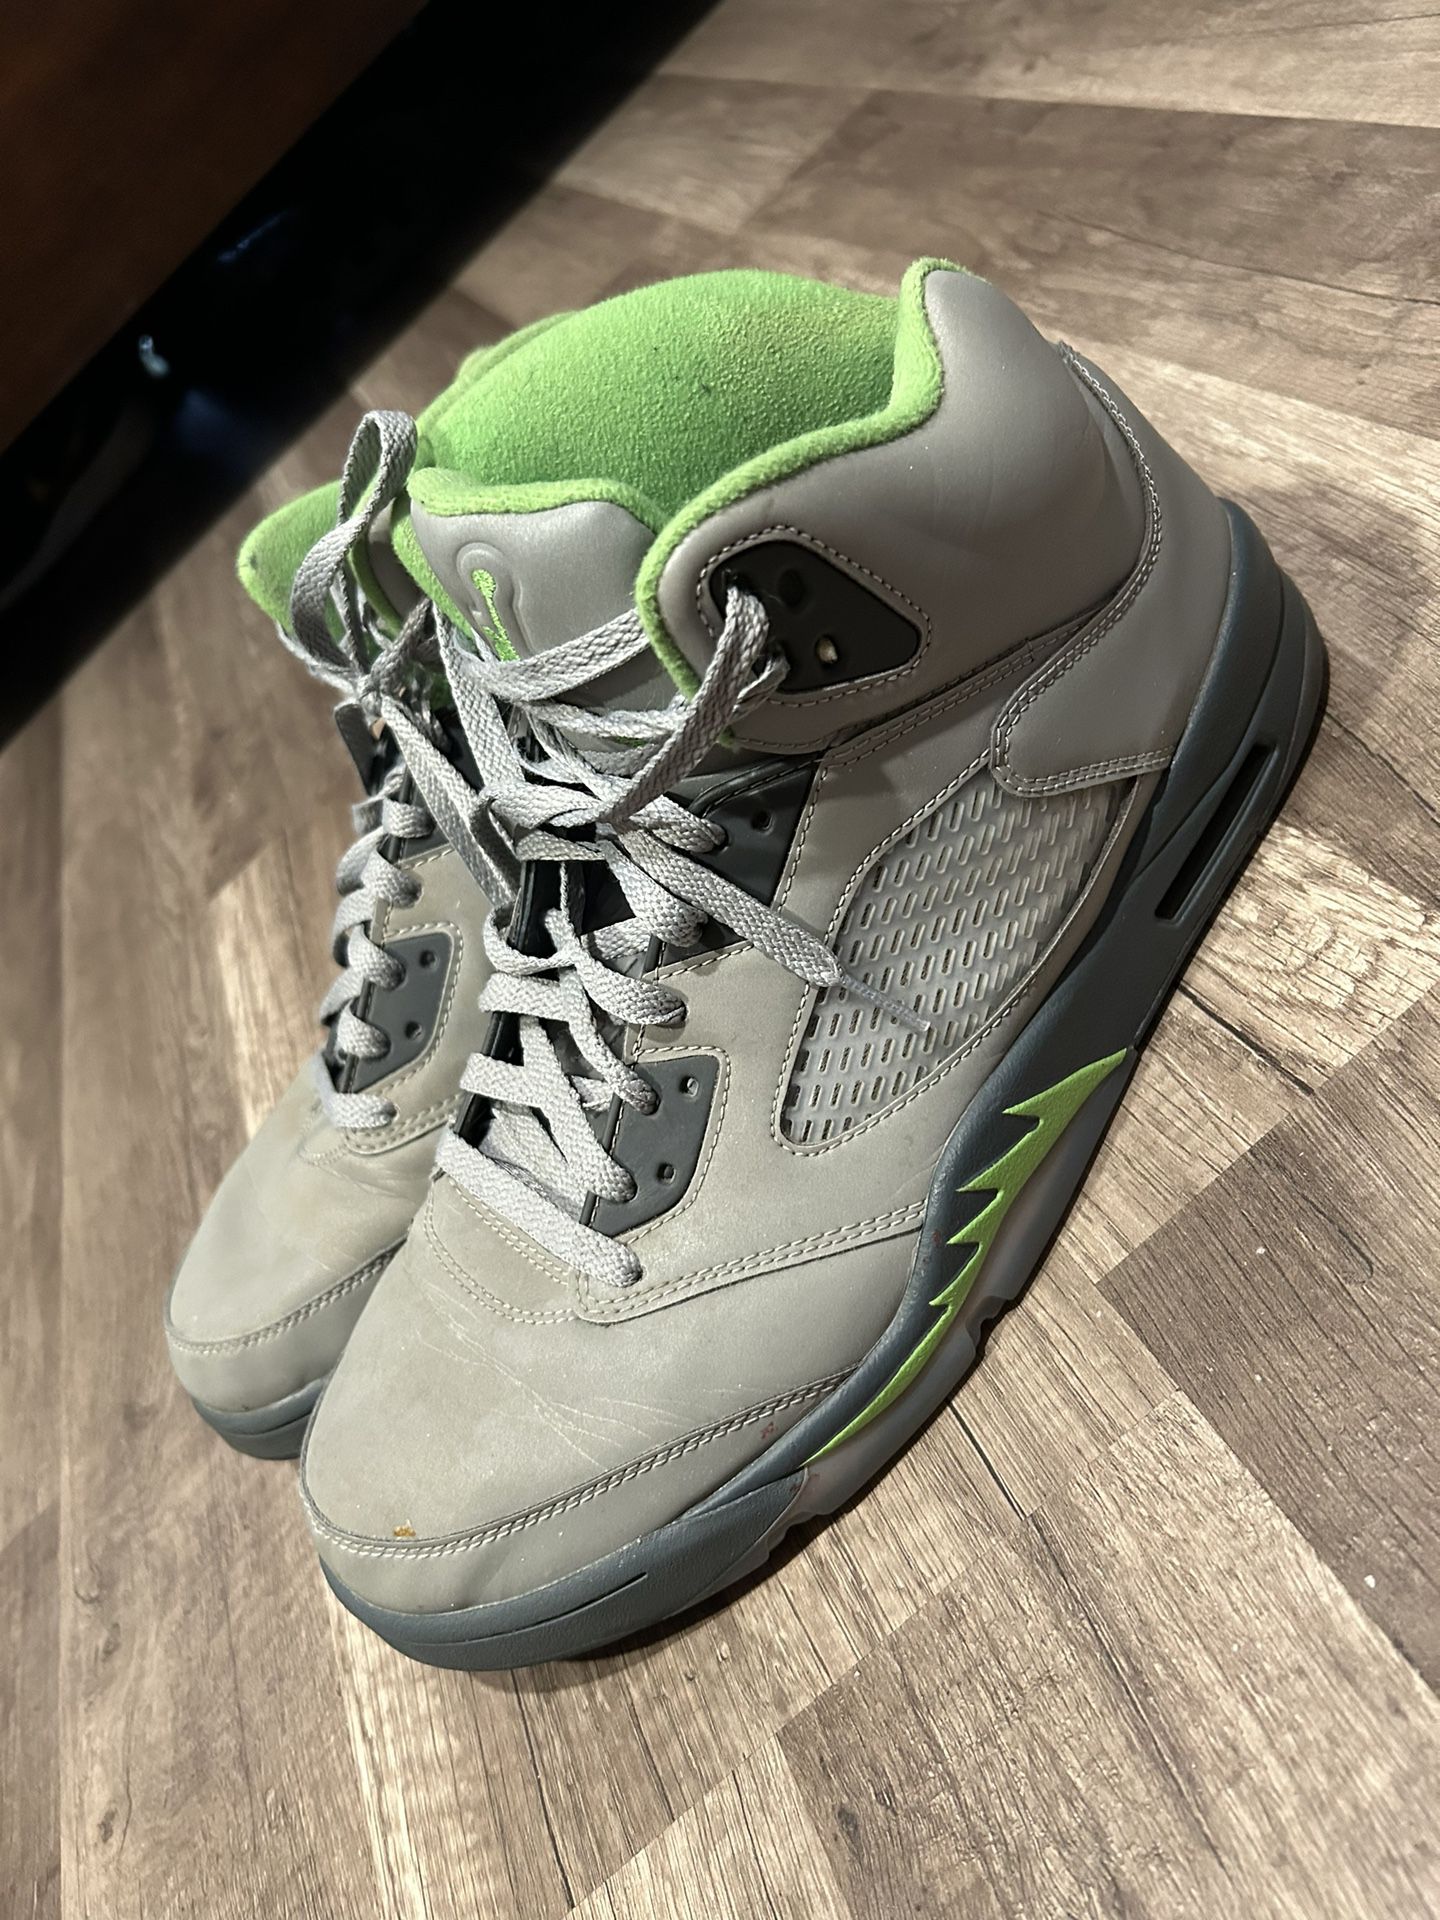 Air Jordan 5 Retro Green Bean Size 13